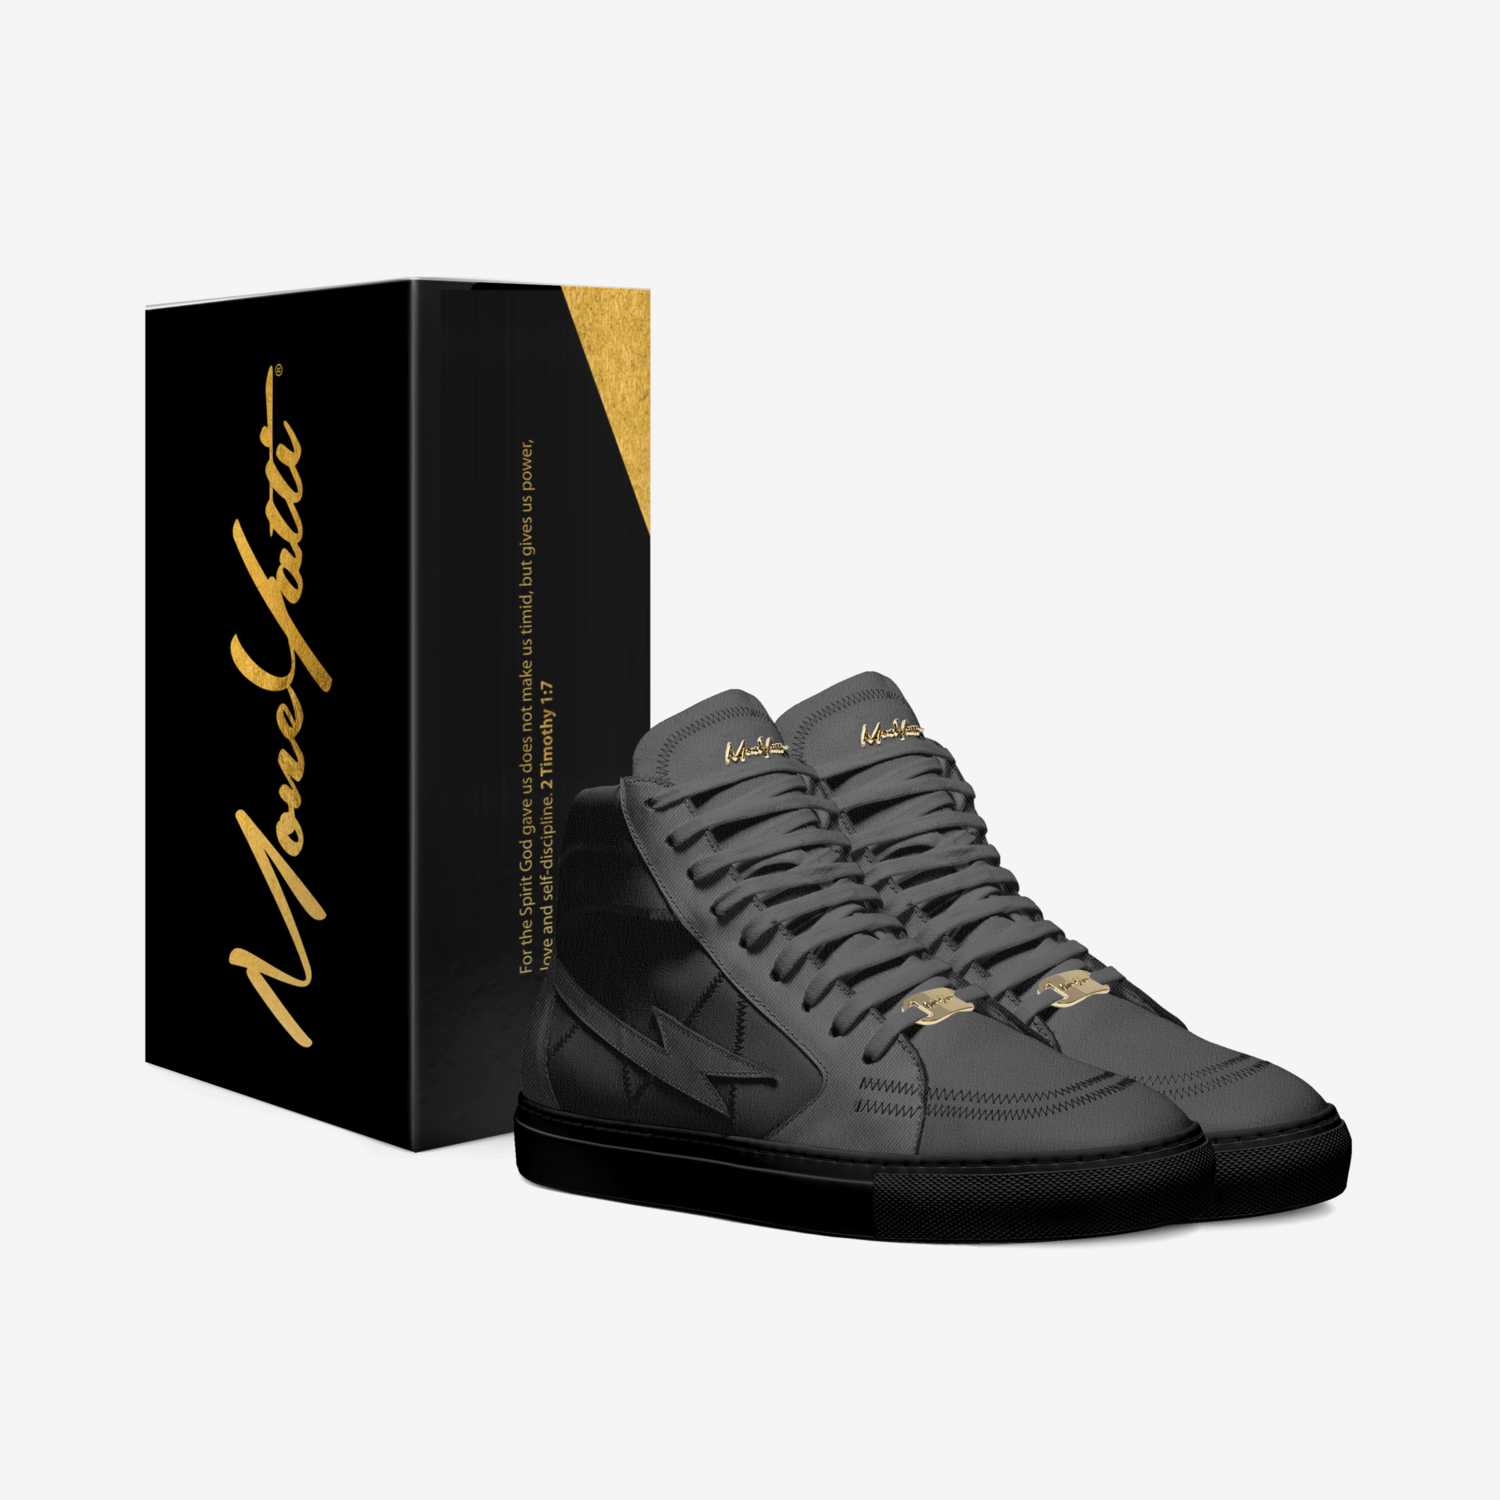 Moneyatti Rebel 01 custom made in Italy shoes by Moneyatti Brand | Box view